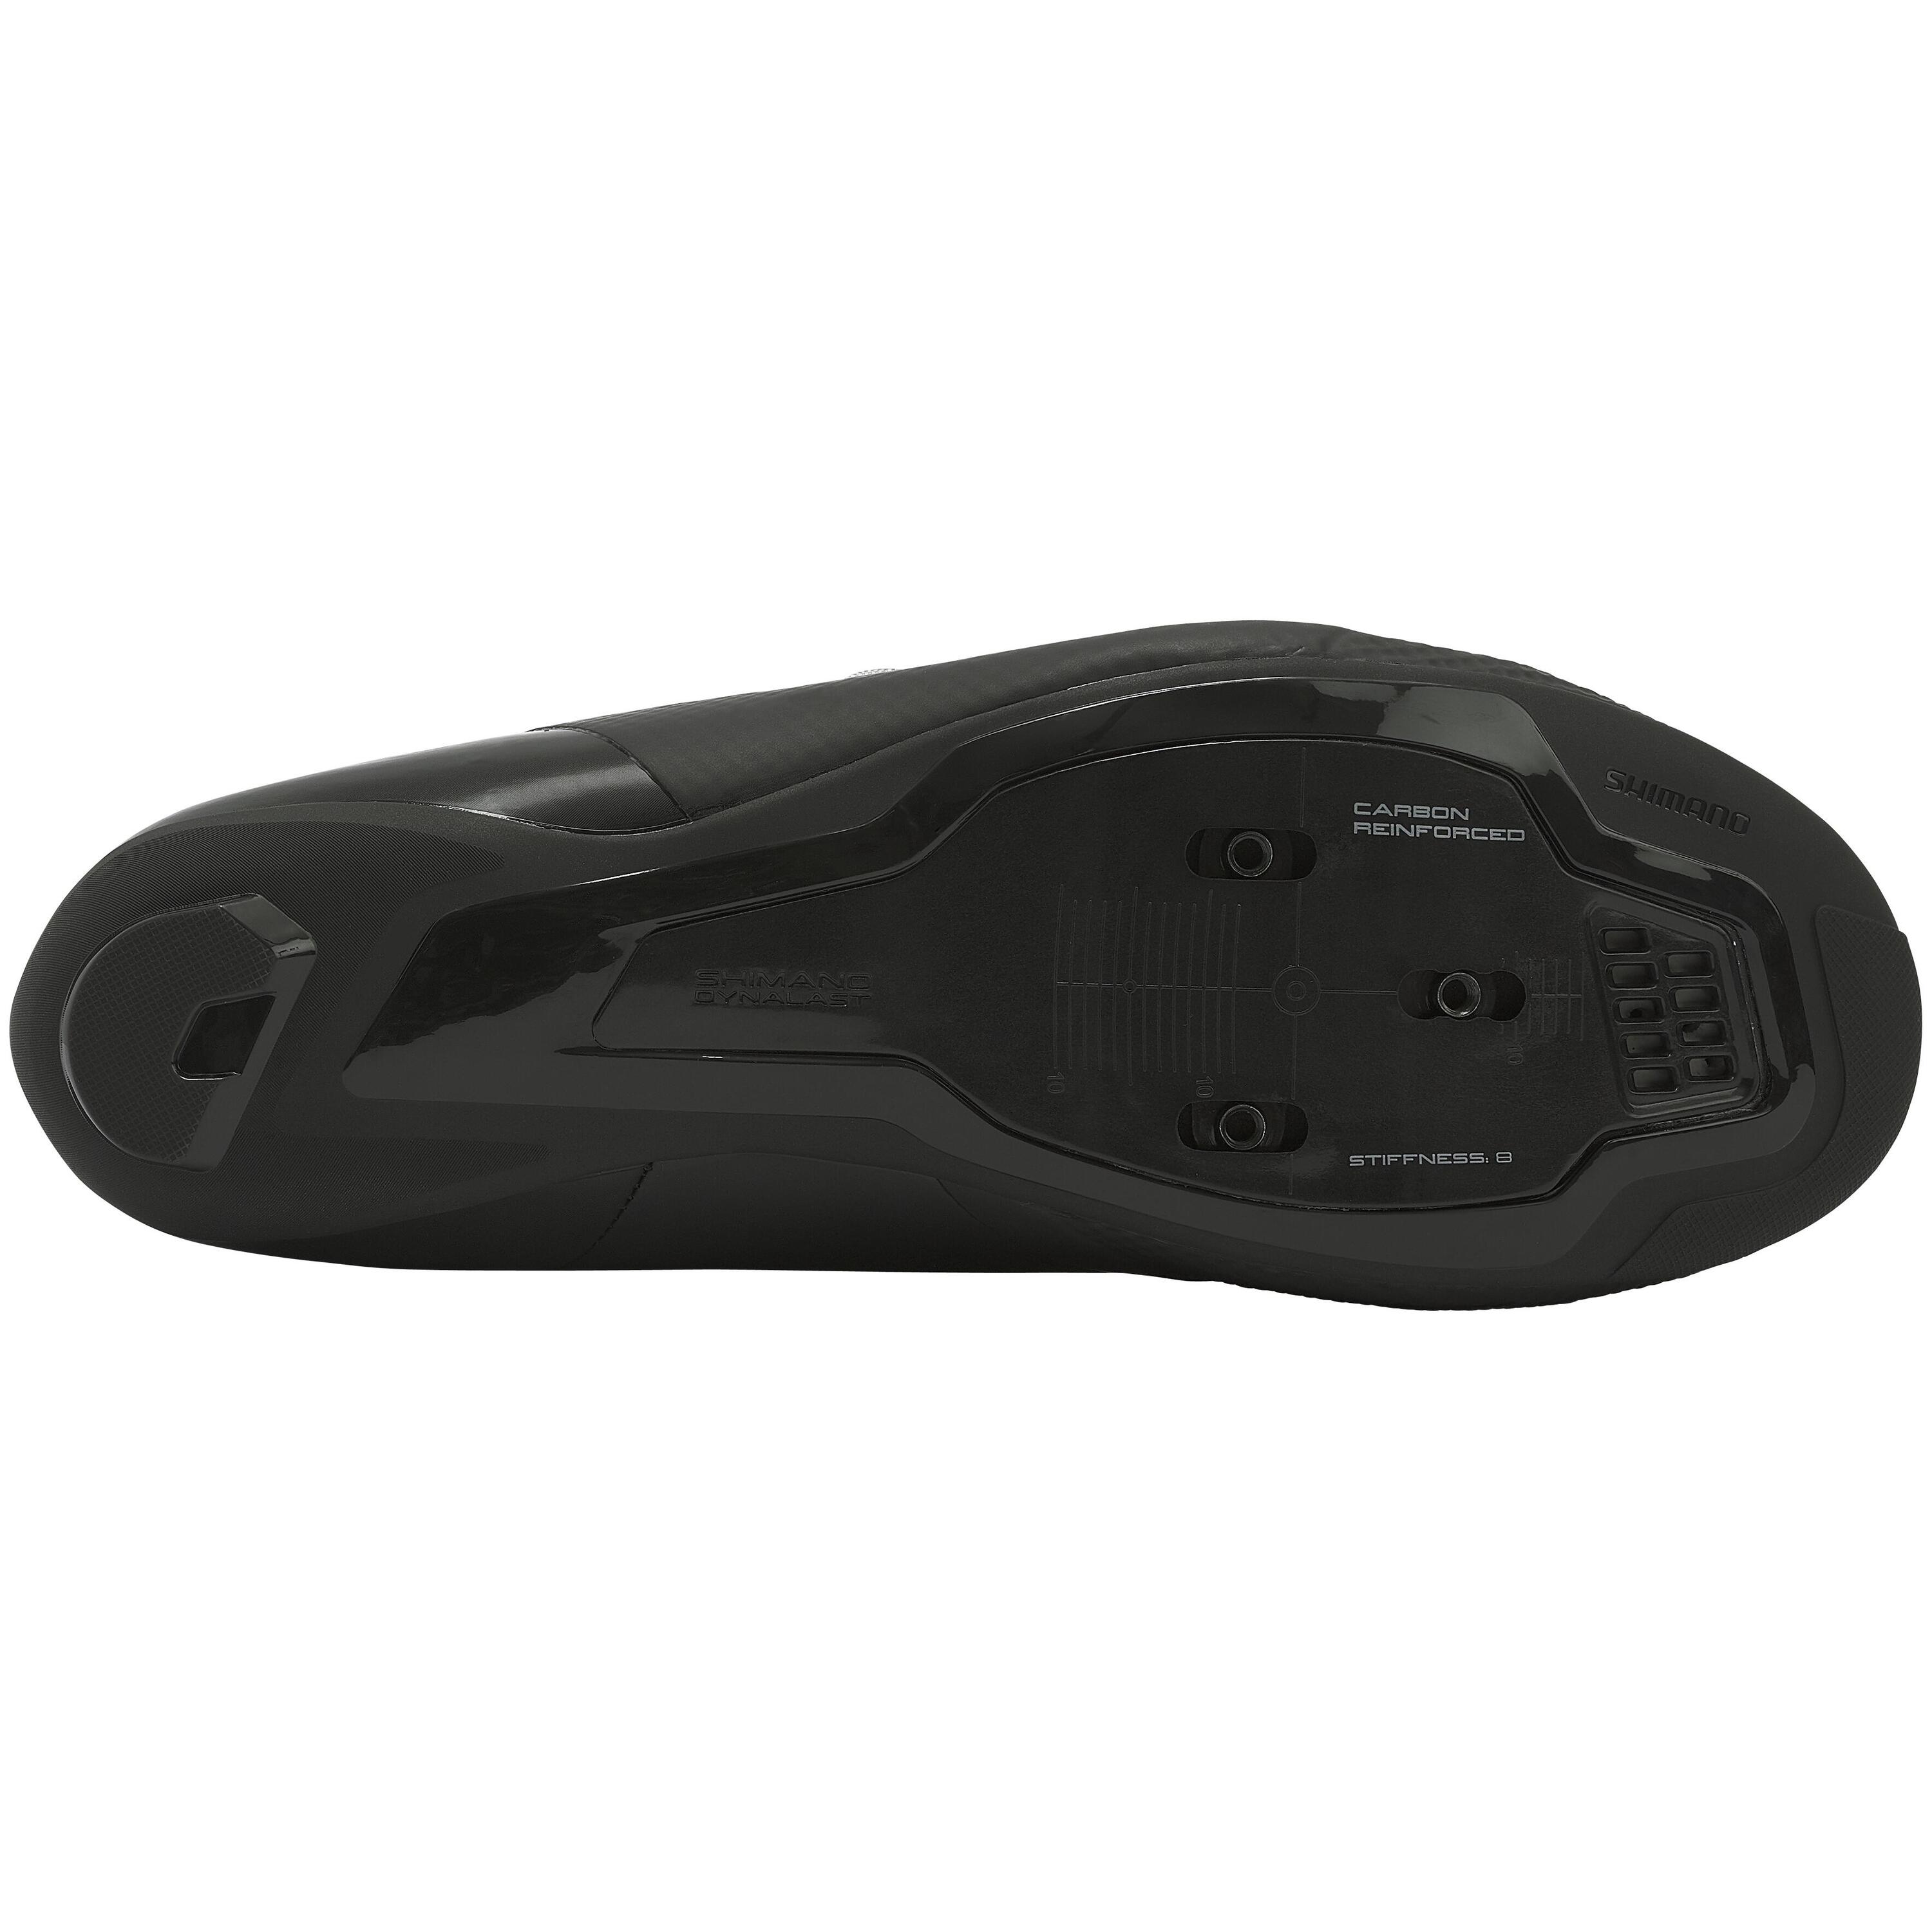 Road Cycling Shoes RC502 - Black 3/4